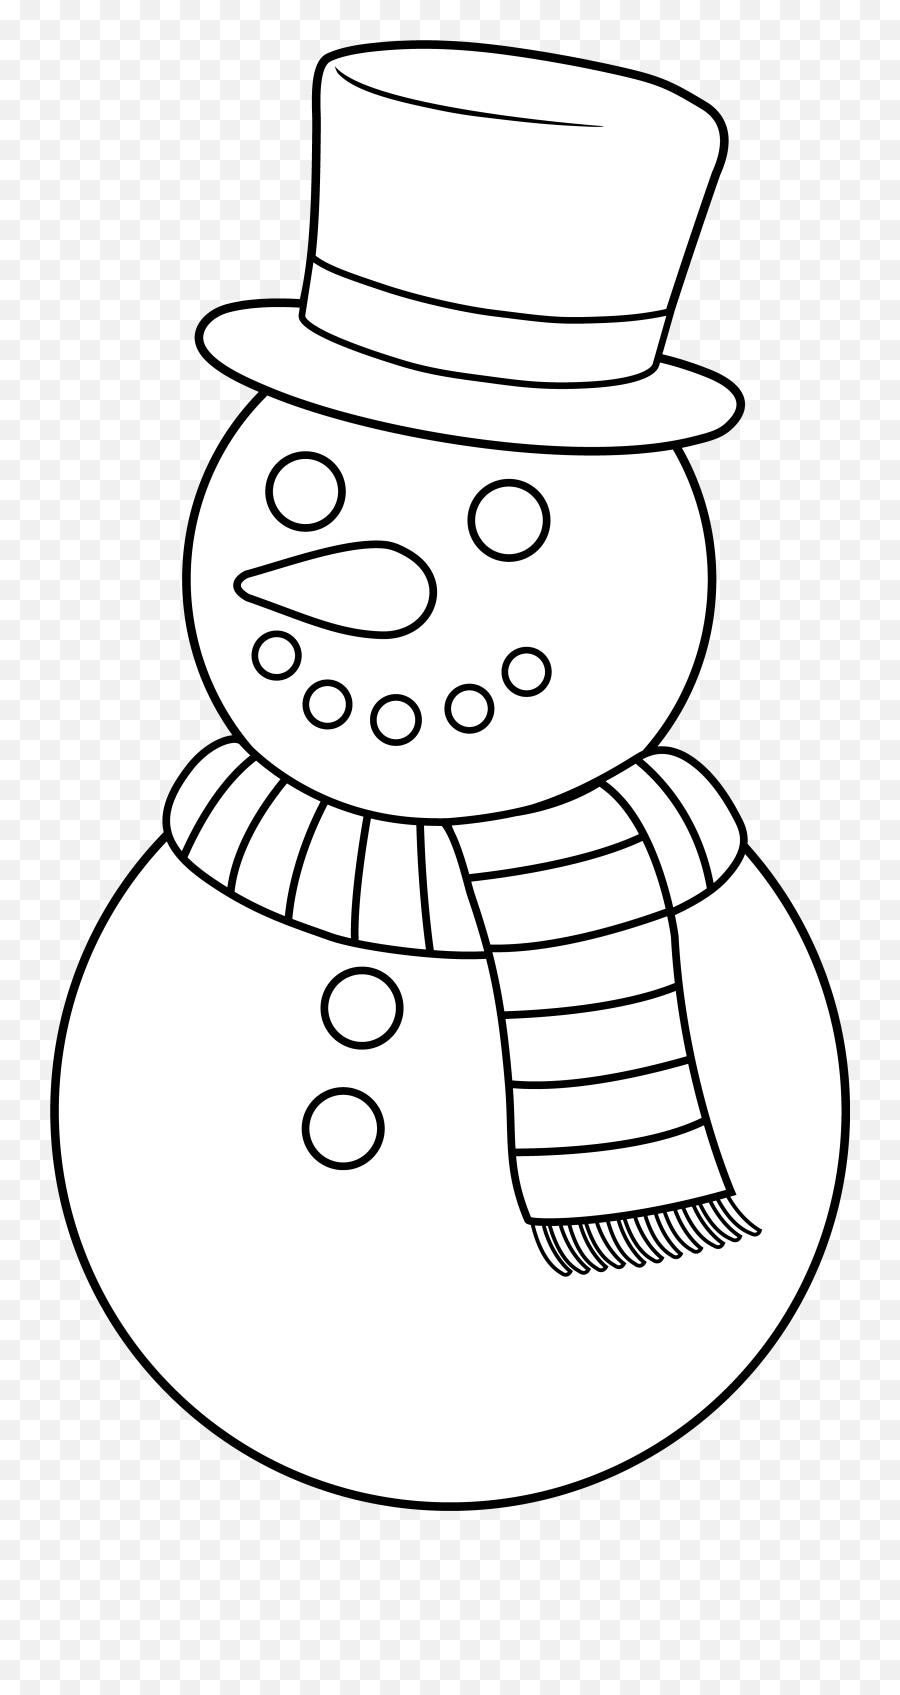 Snowman Coloring Pages Snowman Outline - Snowman Clipart Black And White Emoji,Snowman Clipart